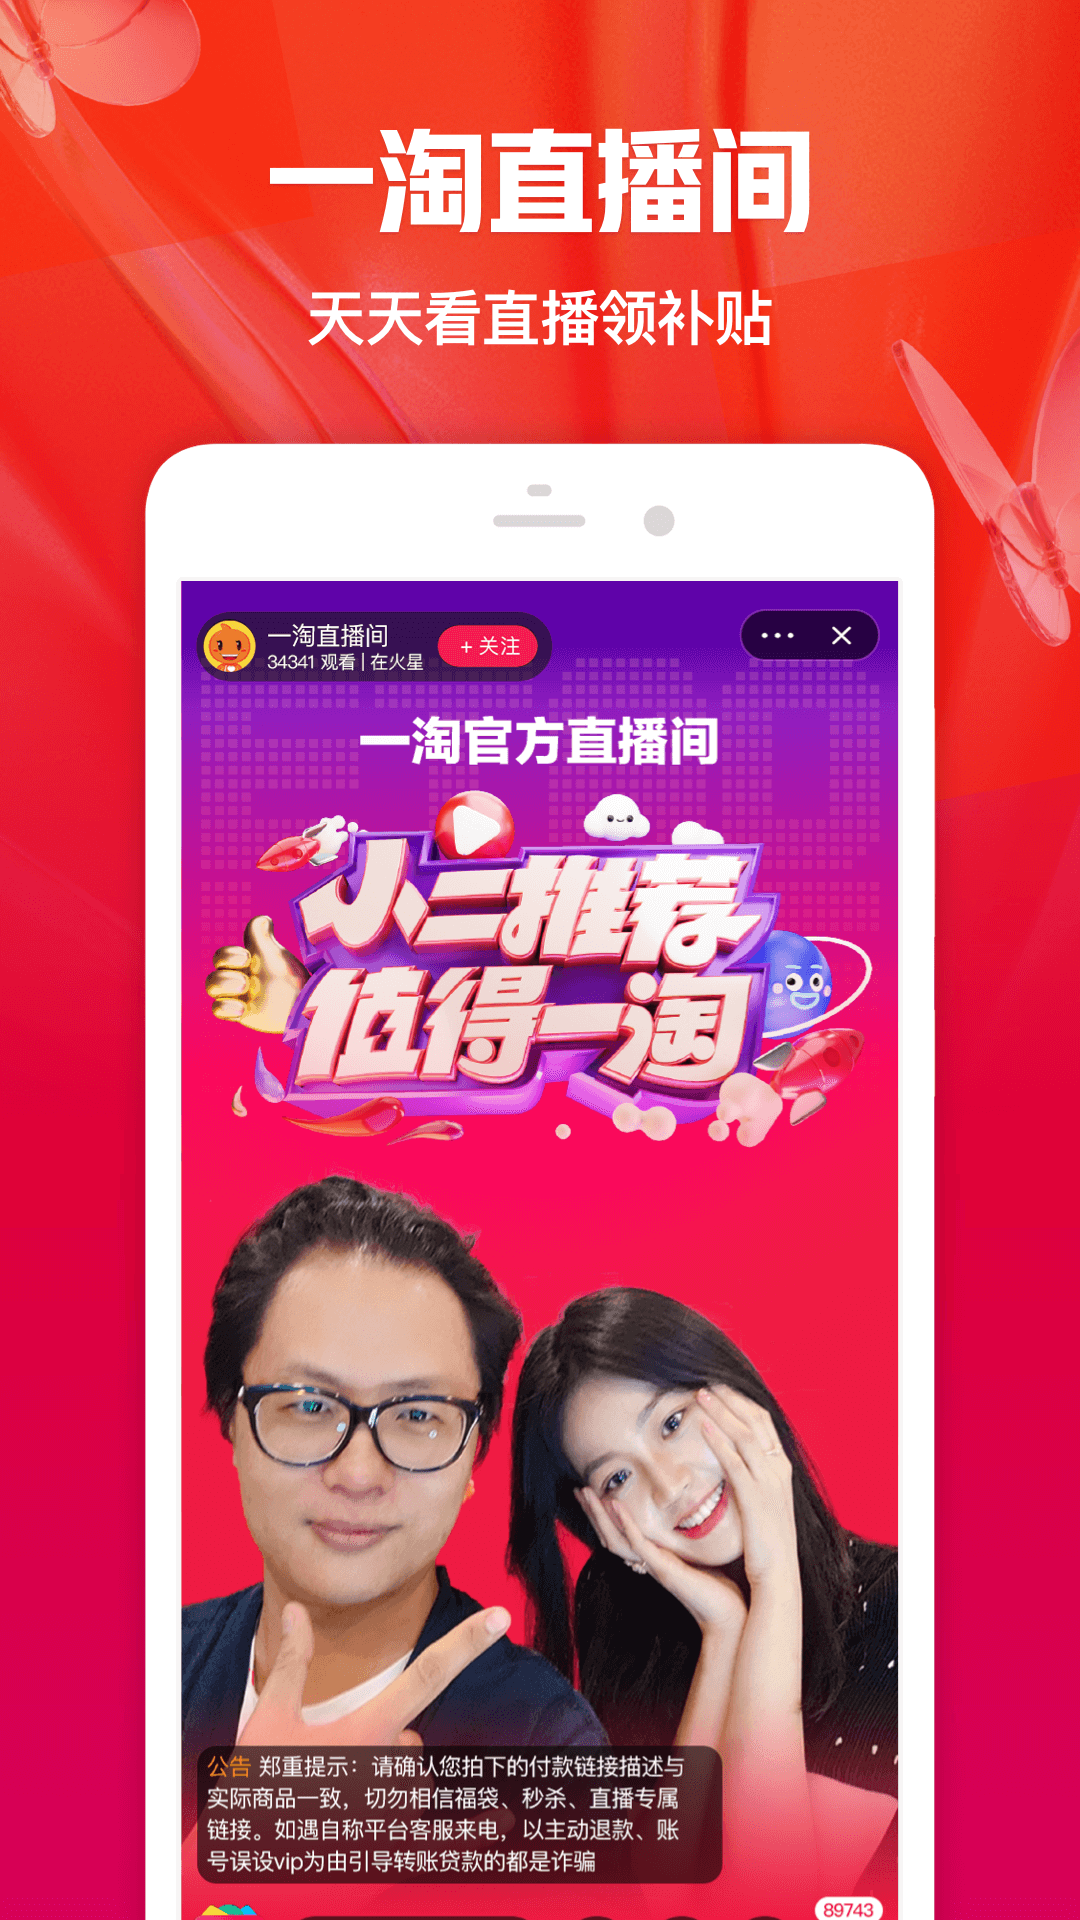 "一淘app.png"/